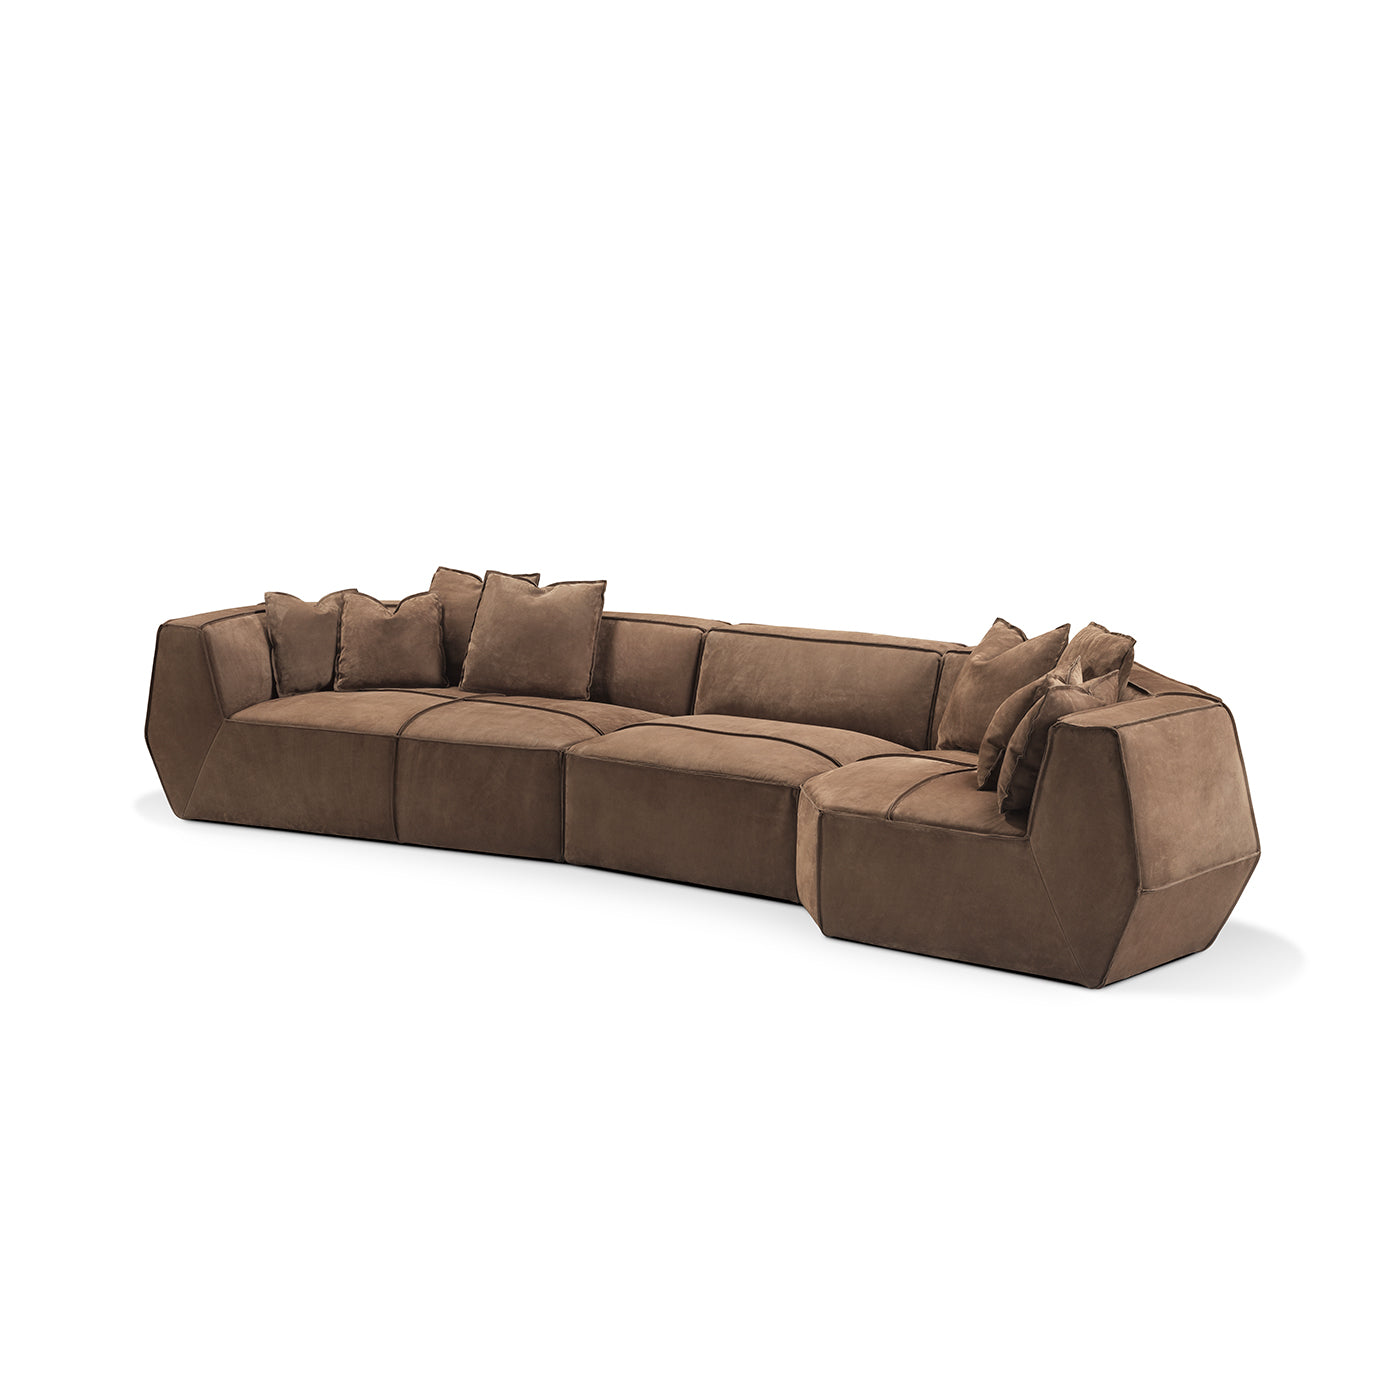 Infinito Large Brown Sofa by Lorenza Bozzoli - Alternative view 3